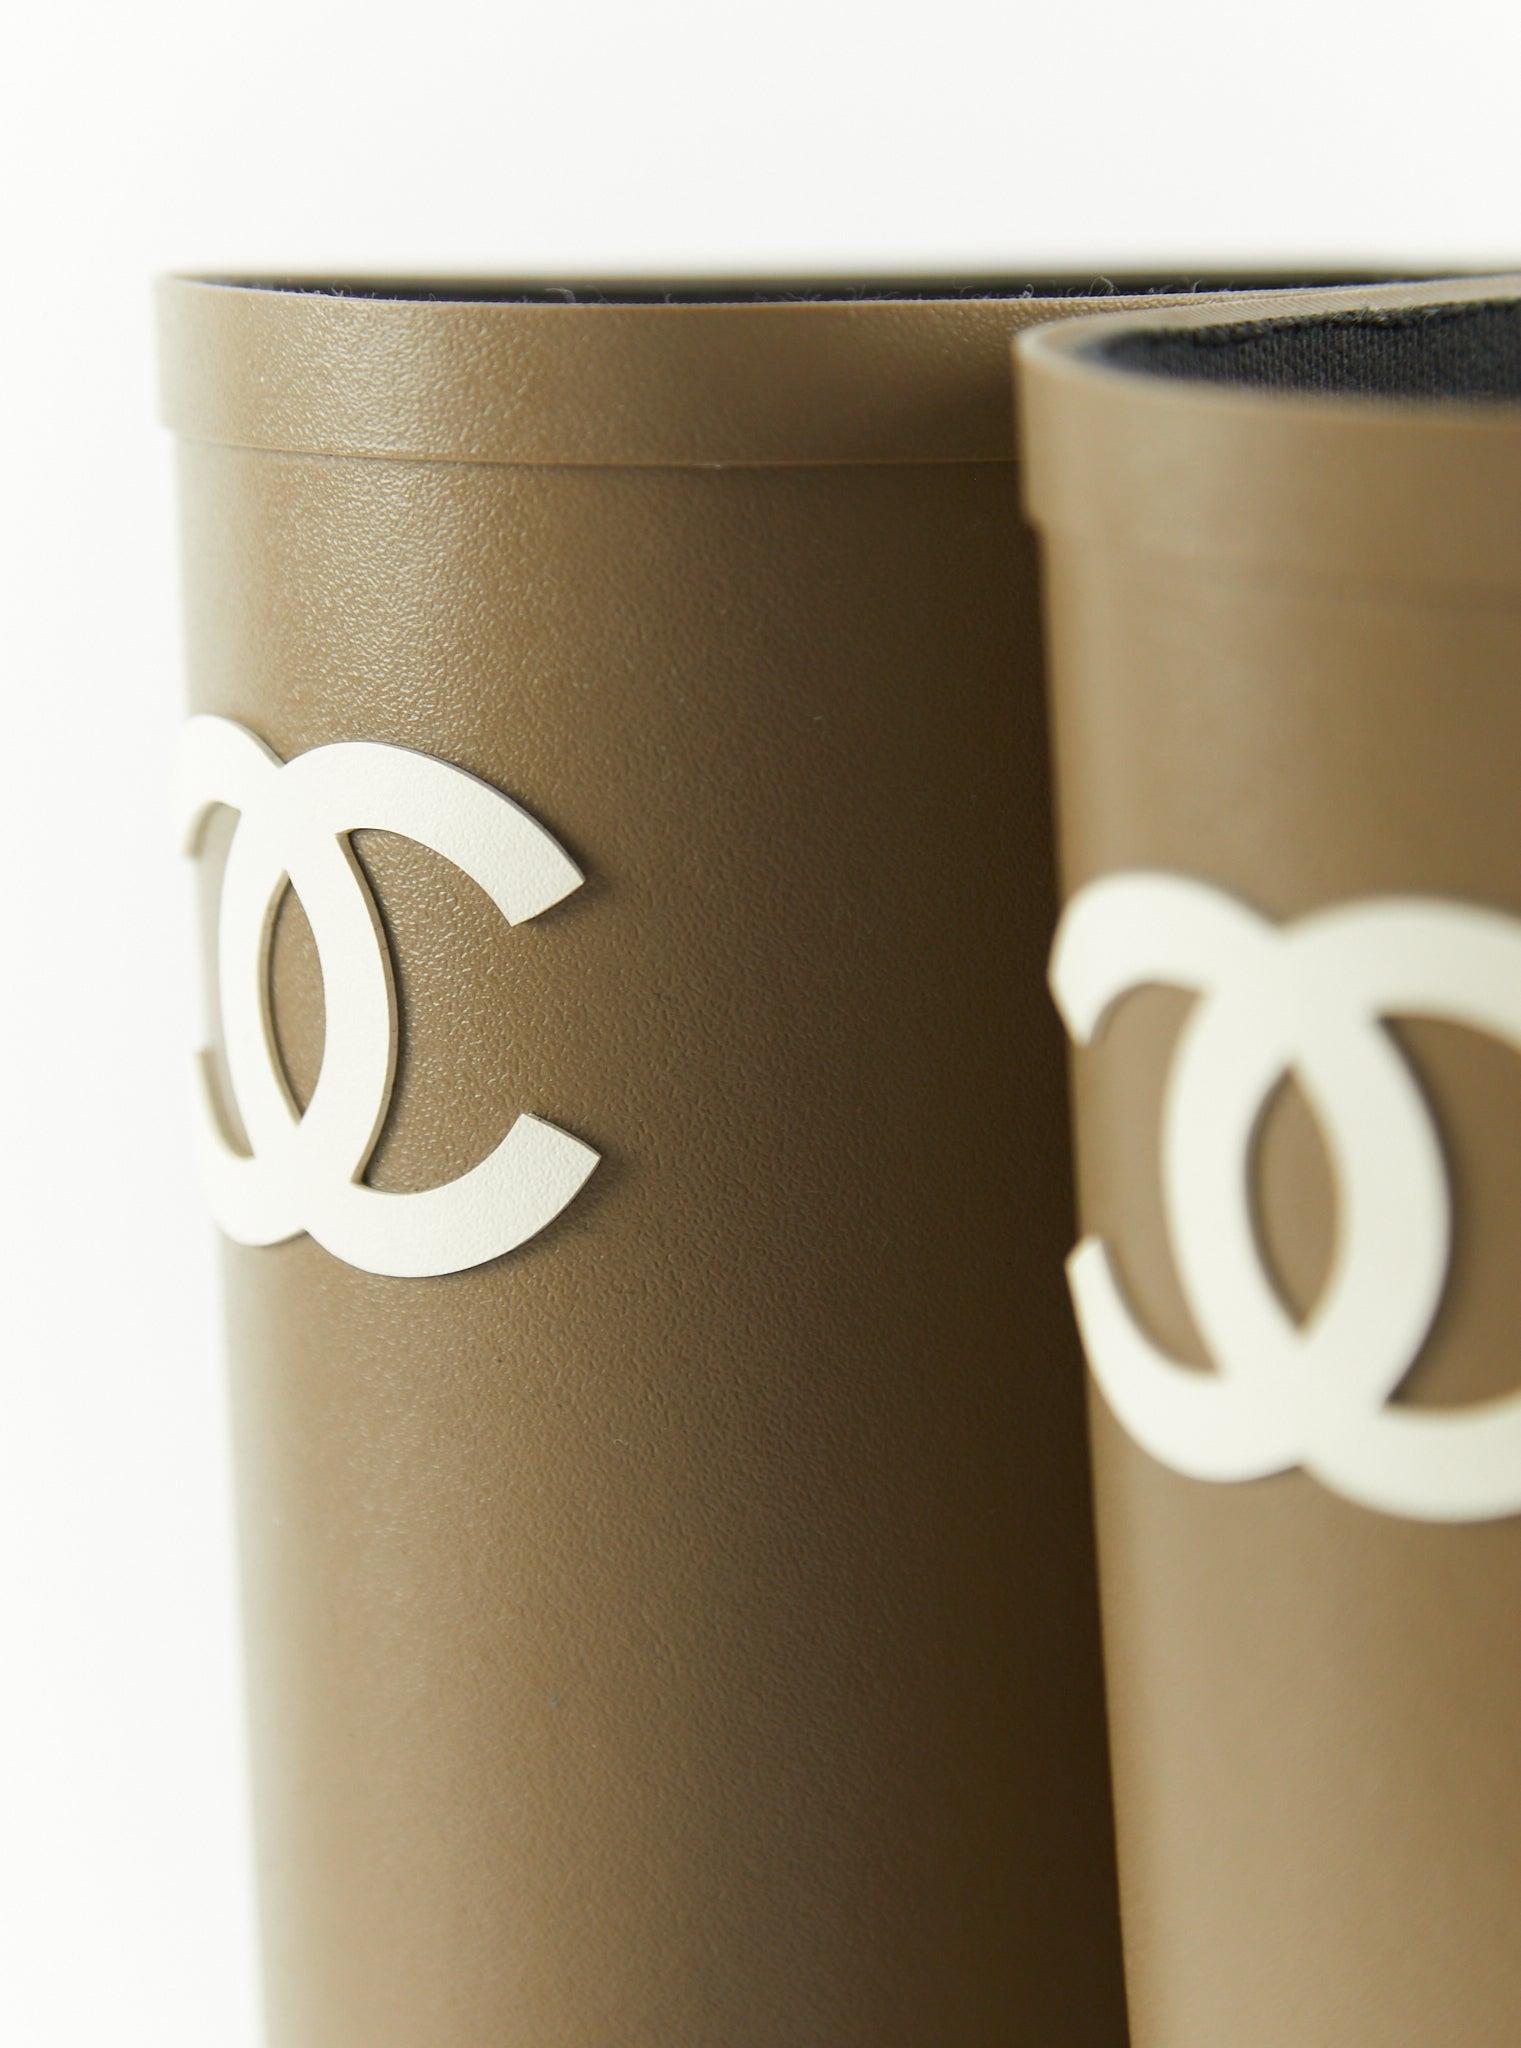 Chanel Wellies in Khaki

Heel height: 25 mm 

Size 38